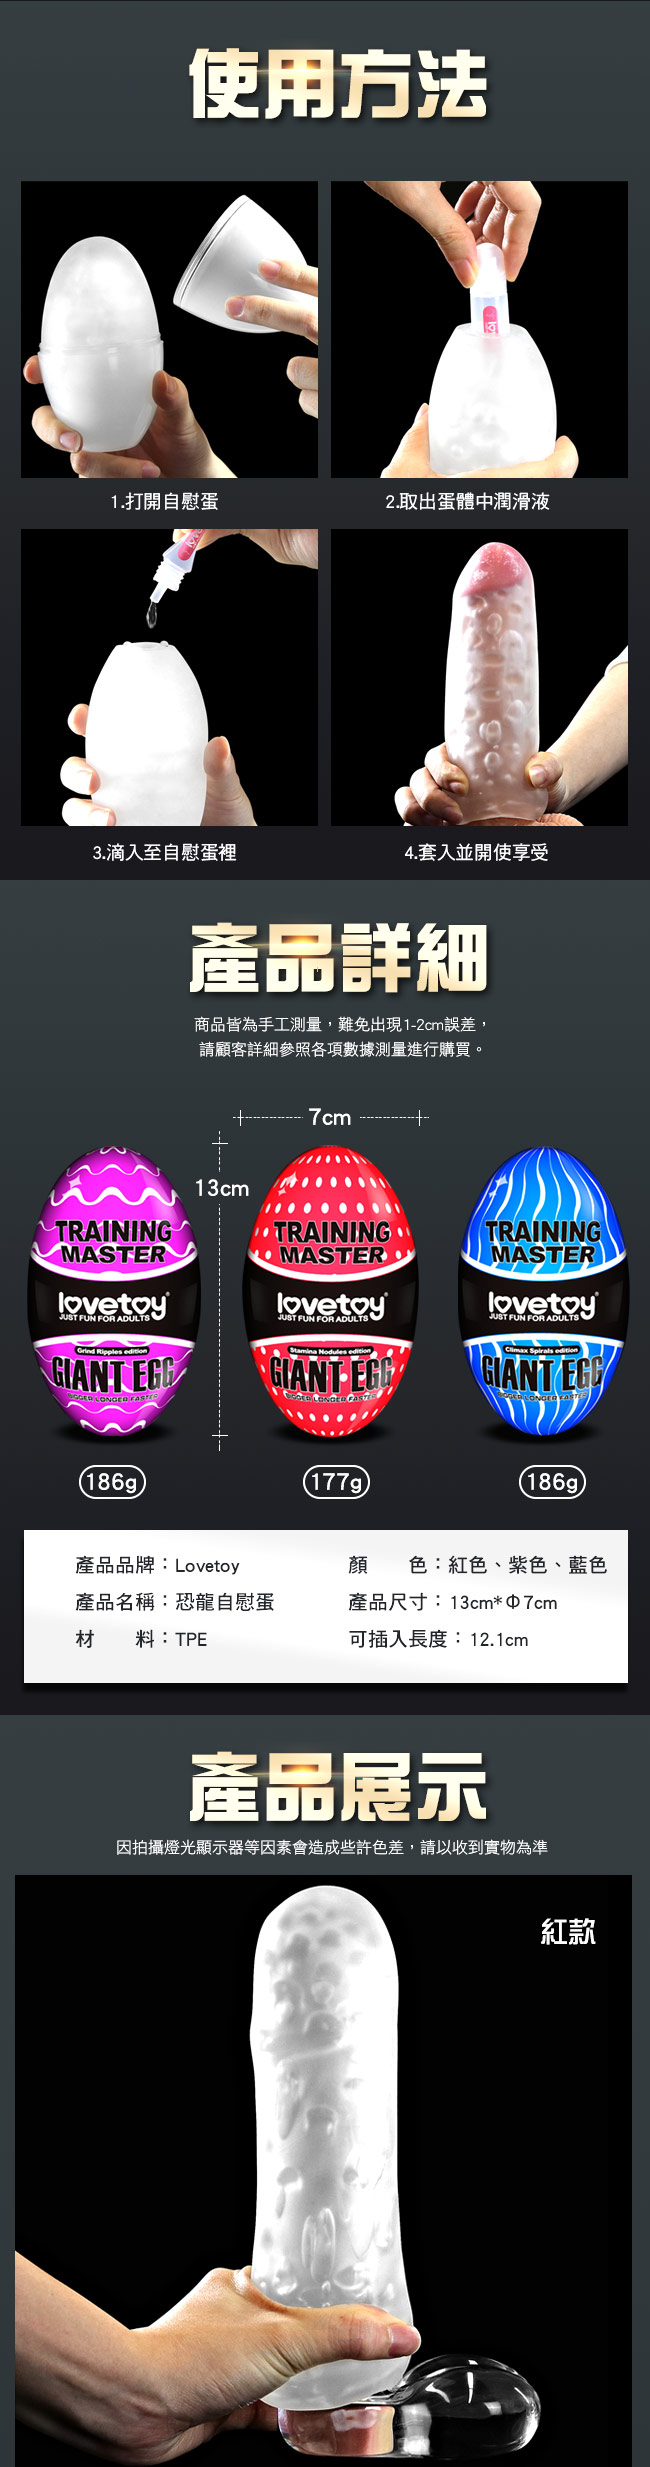 Lovetoy．Training Master Giant Egg 恐龍自慰蛋-凸點顆粒款(紅色)